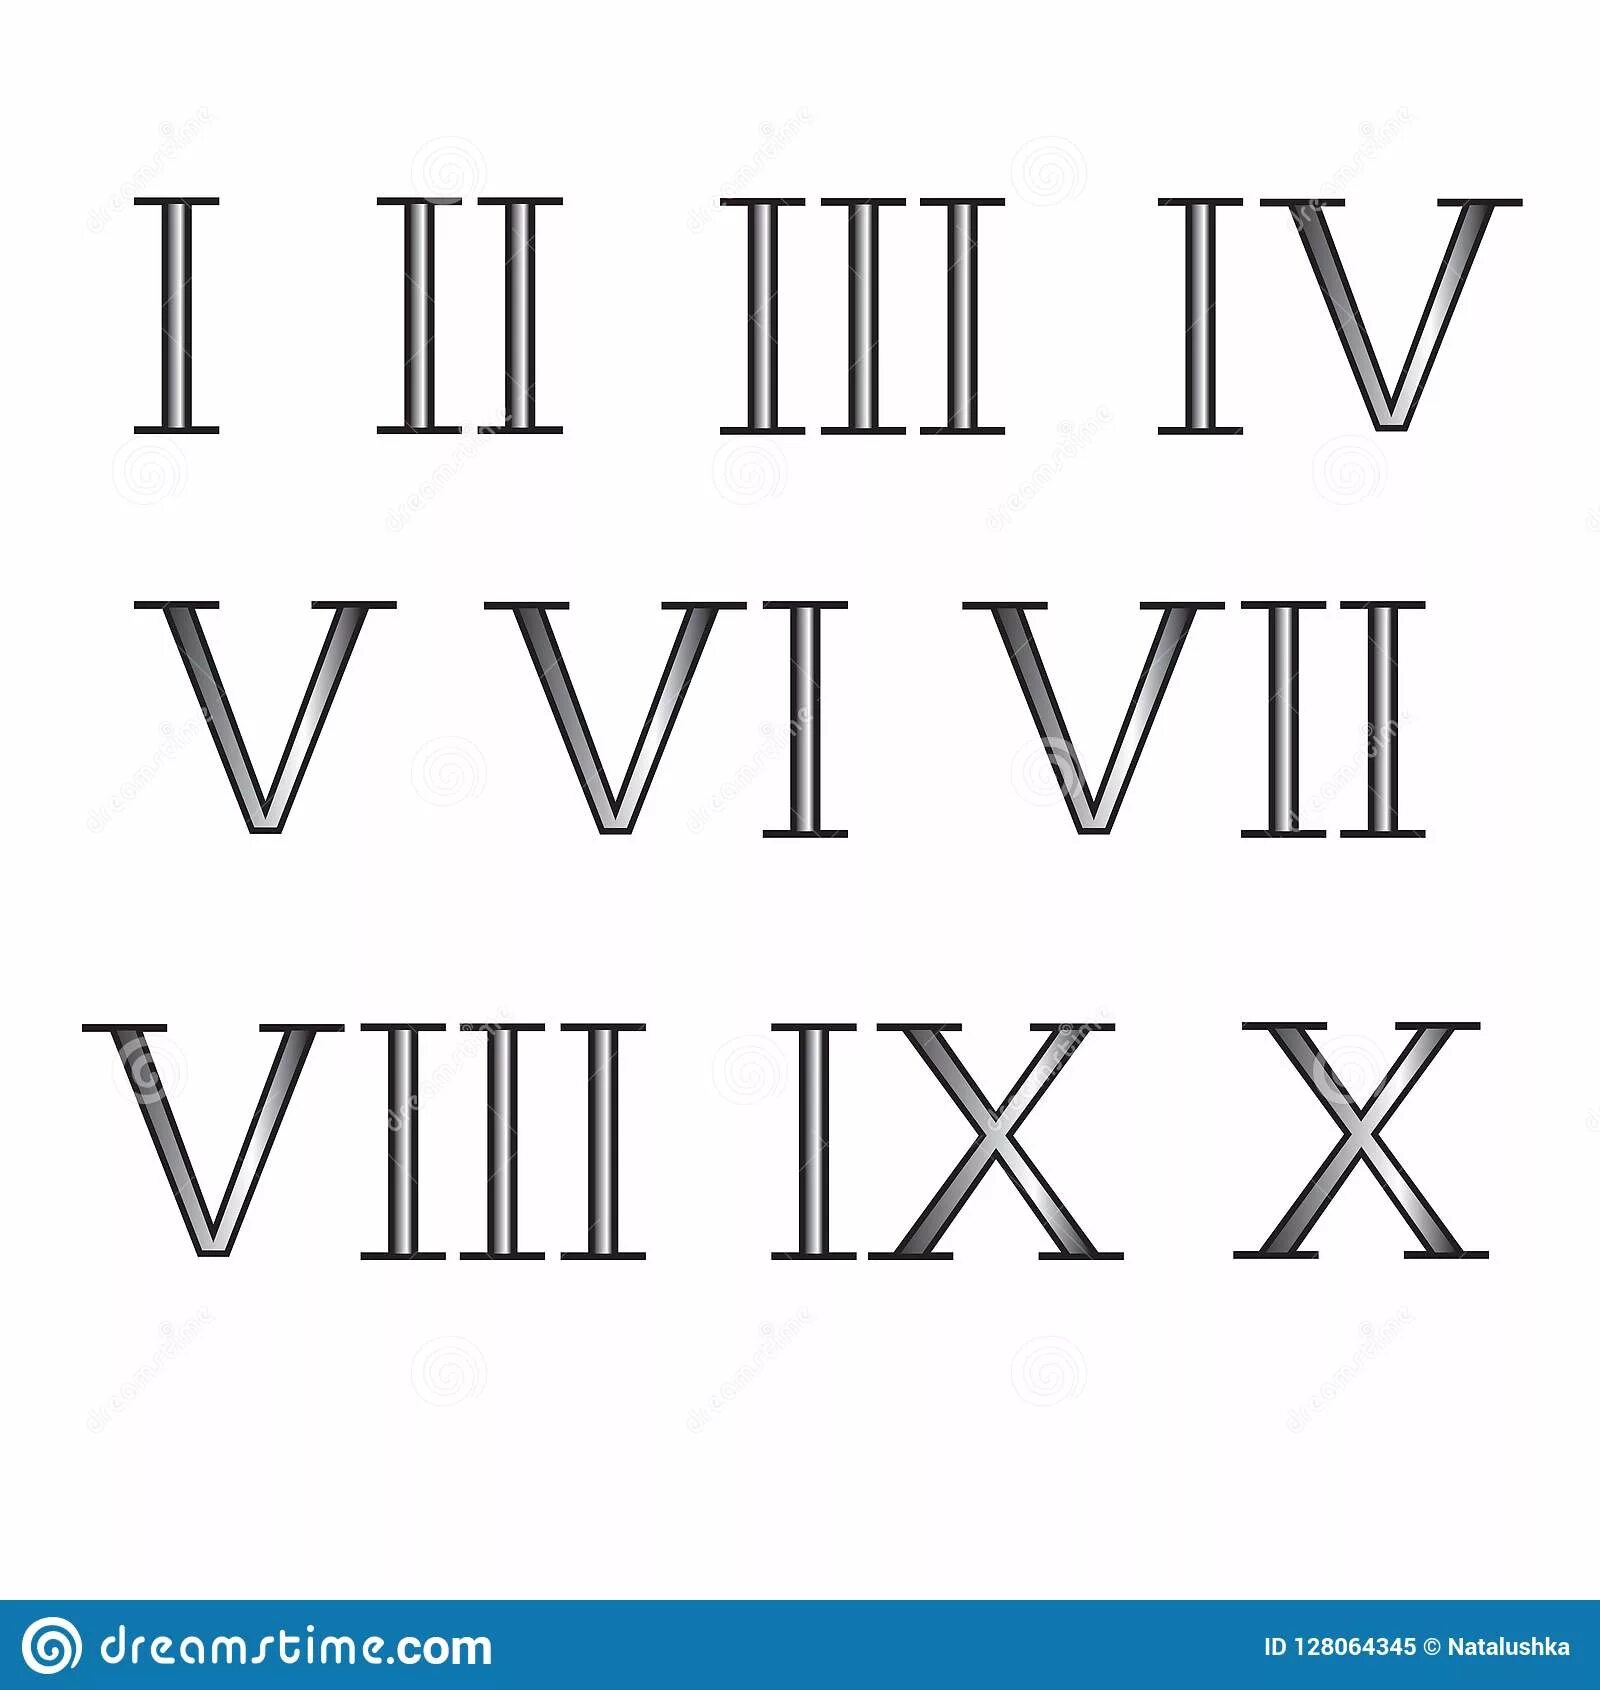 Roman numerals #6